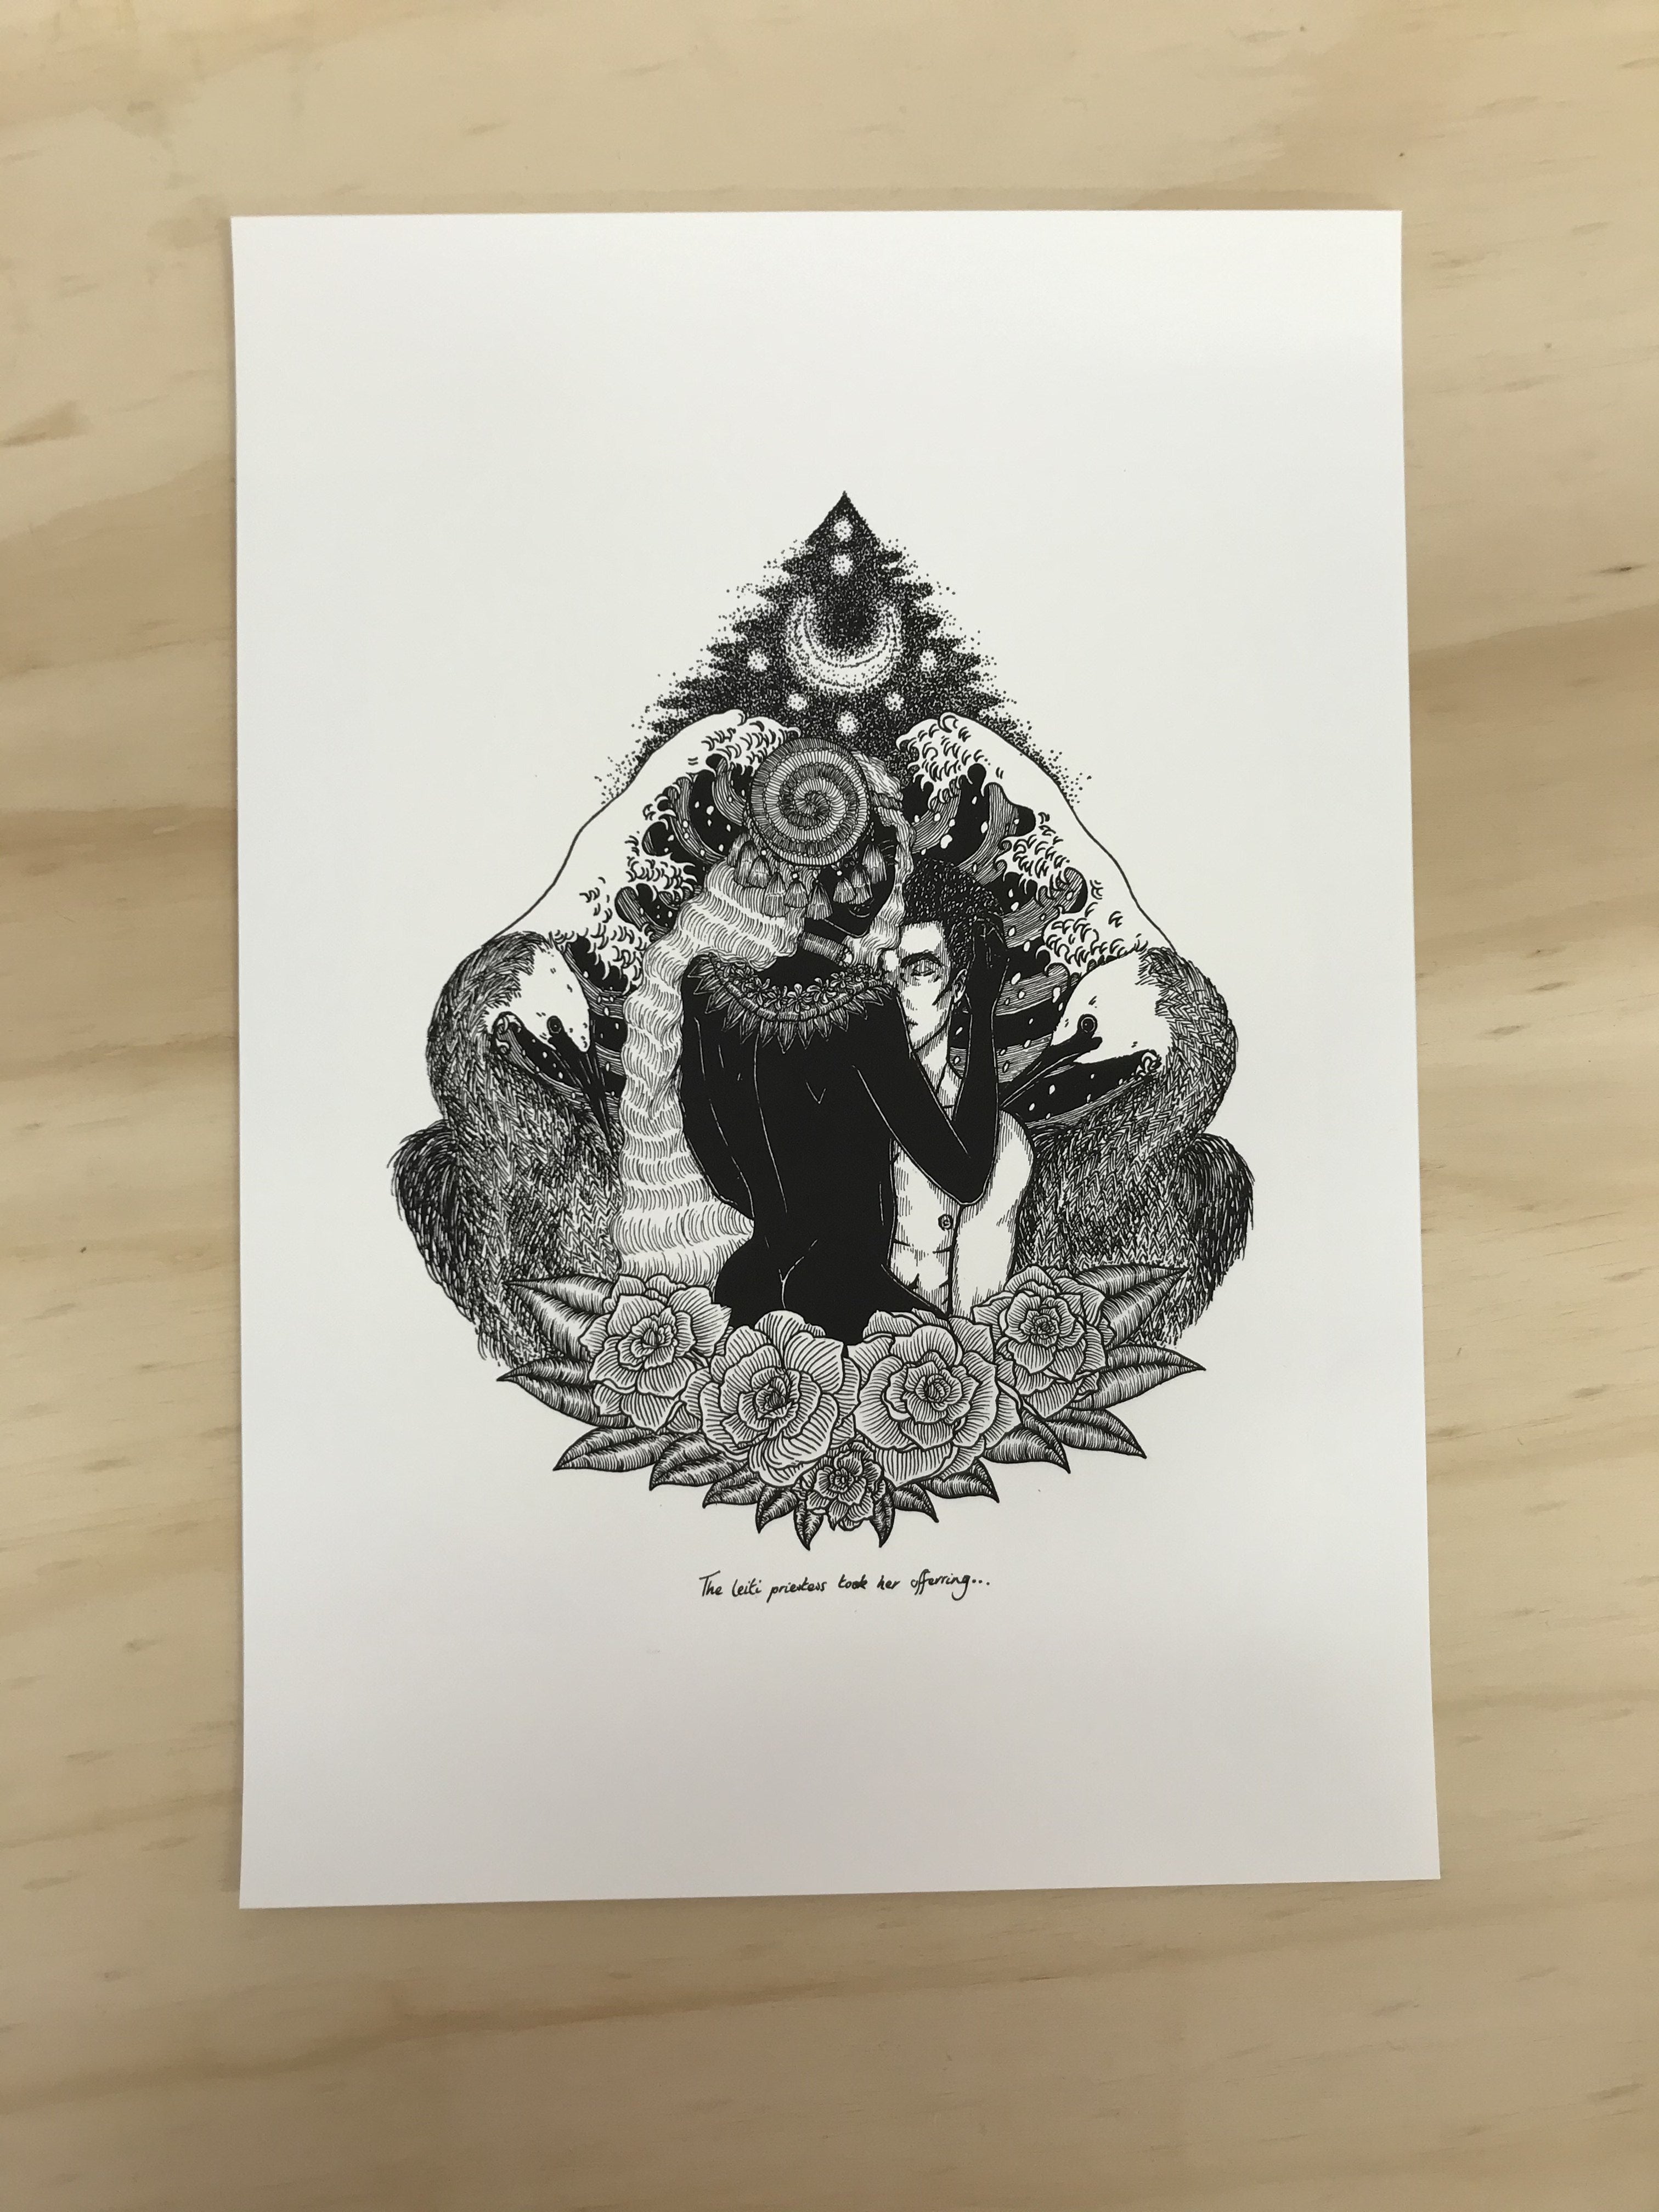 Otua-mo-tangata print edition 3/3